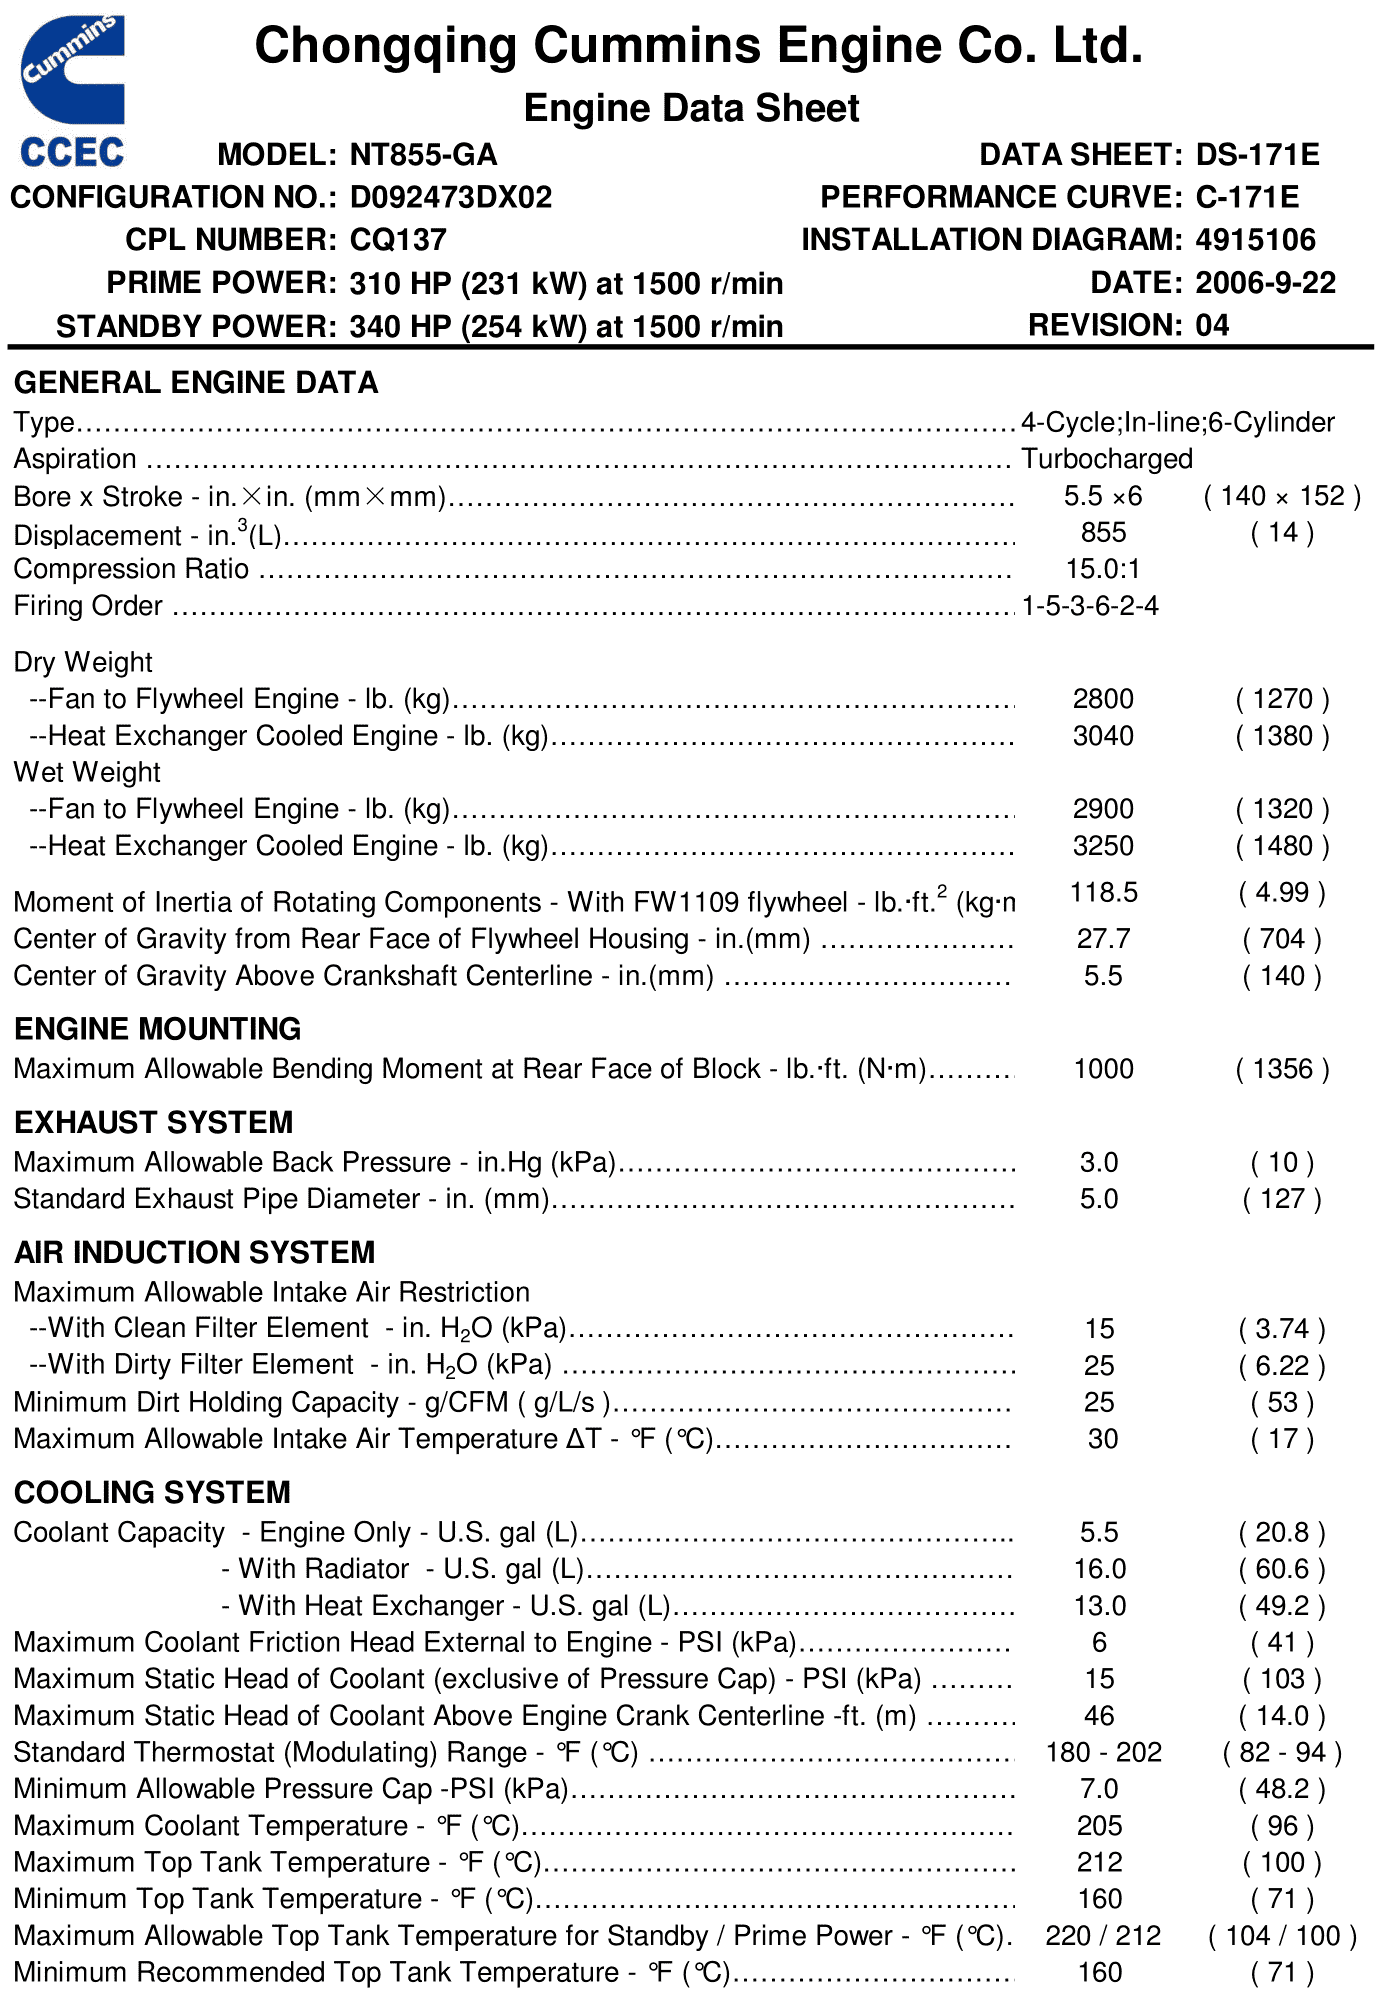 Cummins NT855-GA datasheet